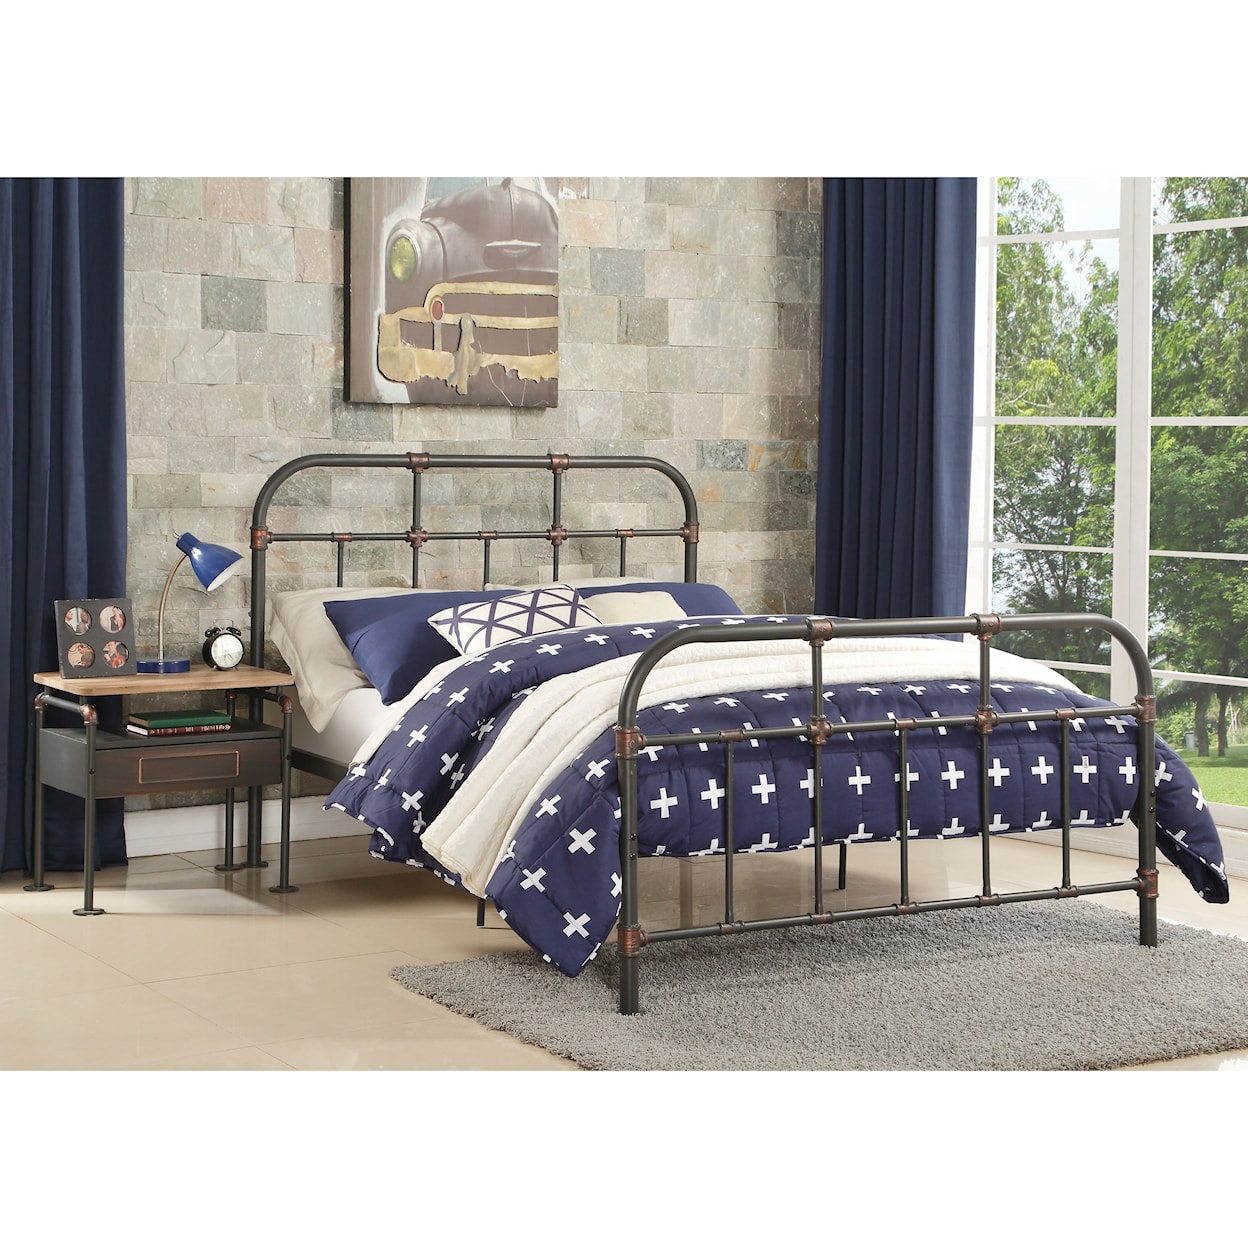 Acme Furniture Nicipolis Full Bed